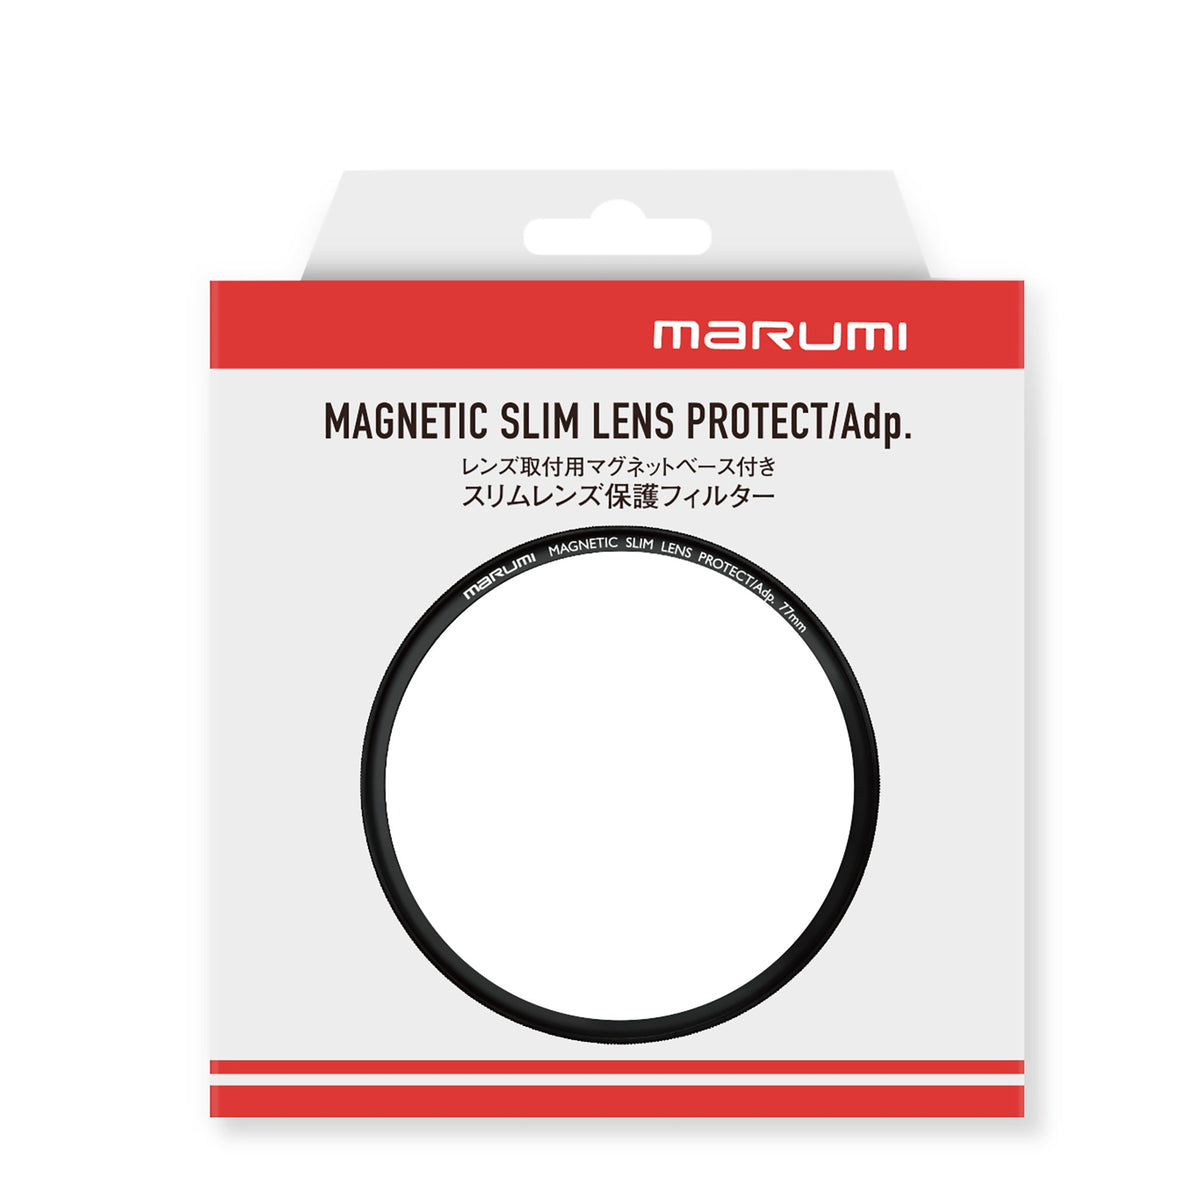 Marumi Magnetic Slim Lens Protect/Adp. – marumi